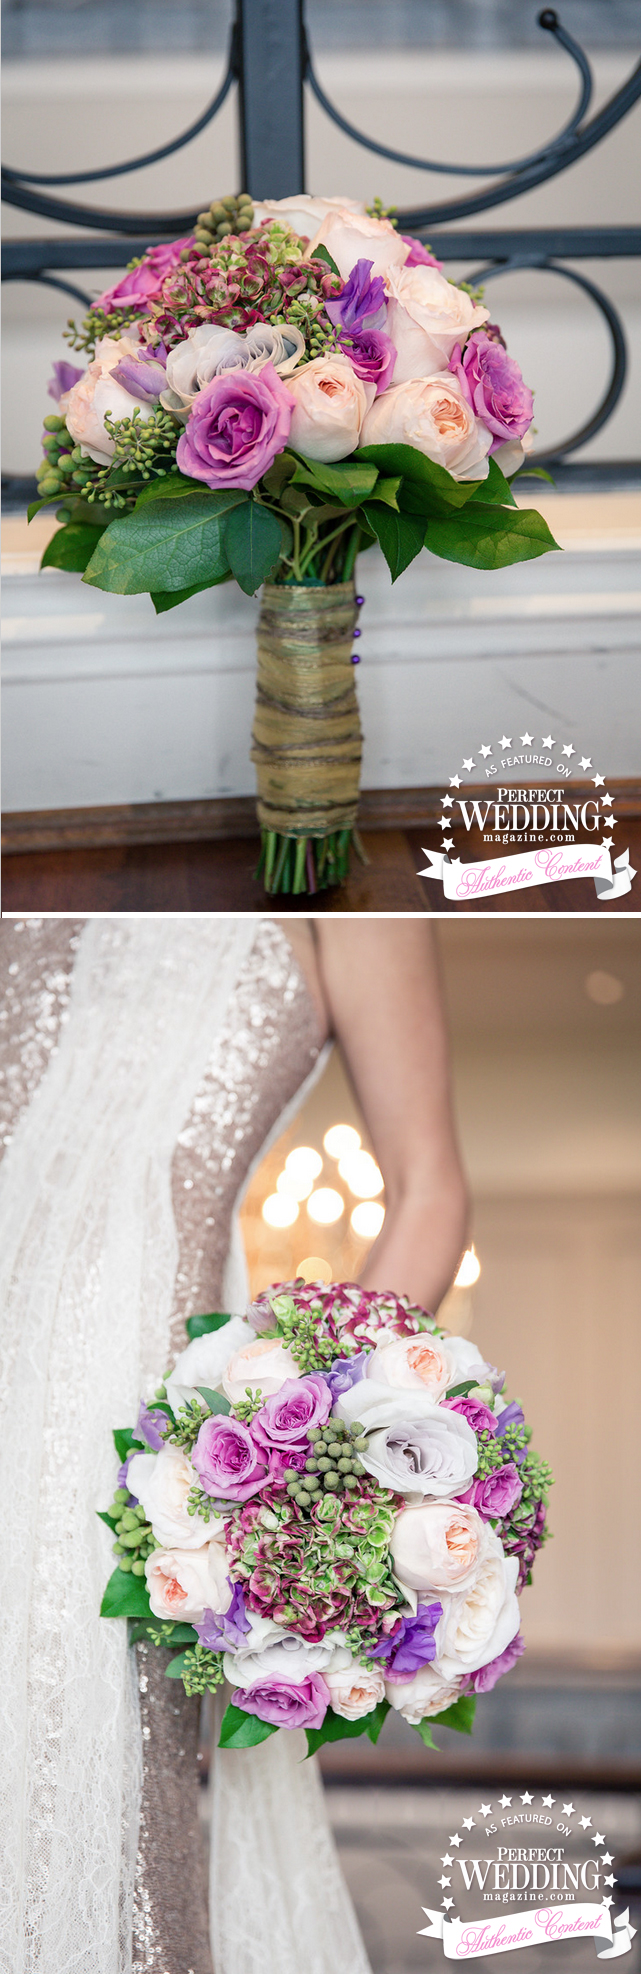 SPRING STYLE, Spring Wedding, Spring Wedding Decor, Flowers, Fashion Bridal, Perfect Wedding Magazine